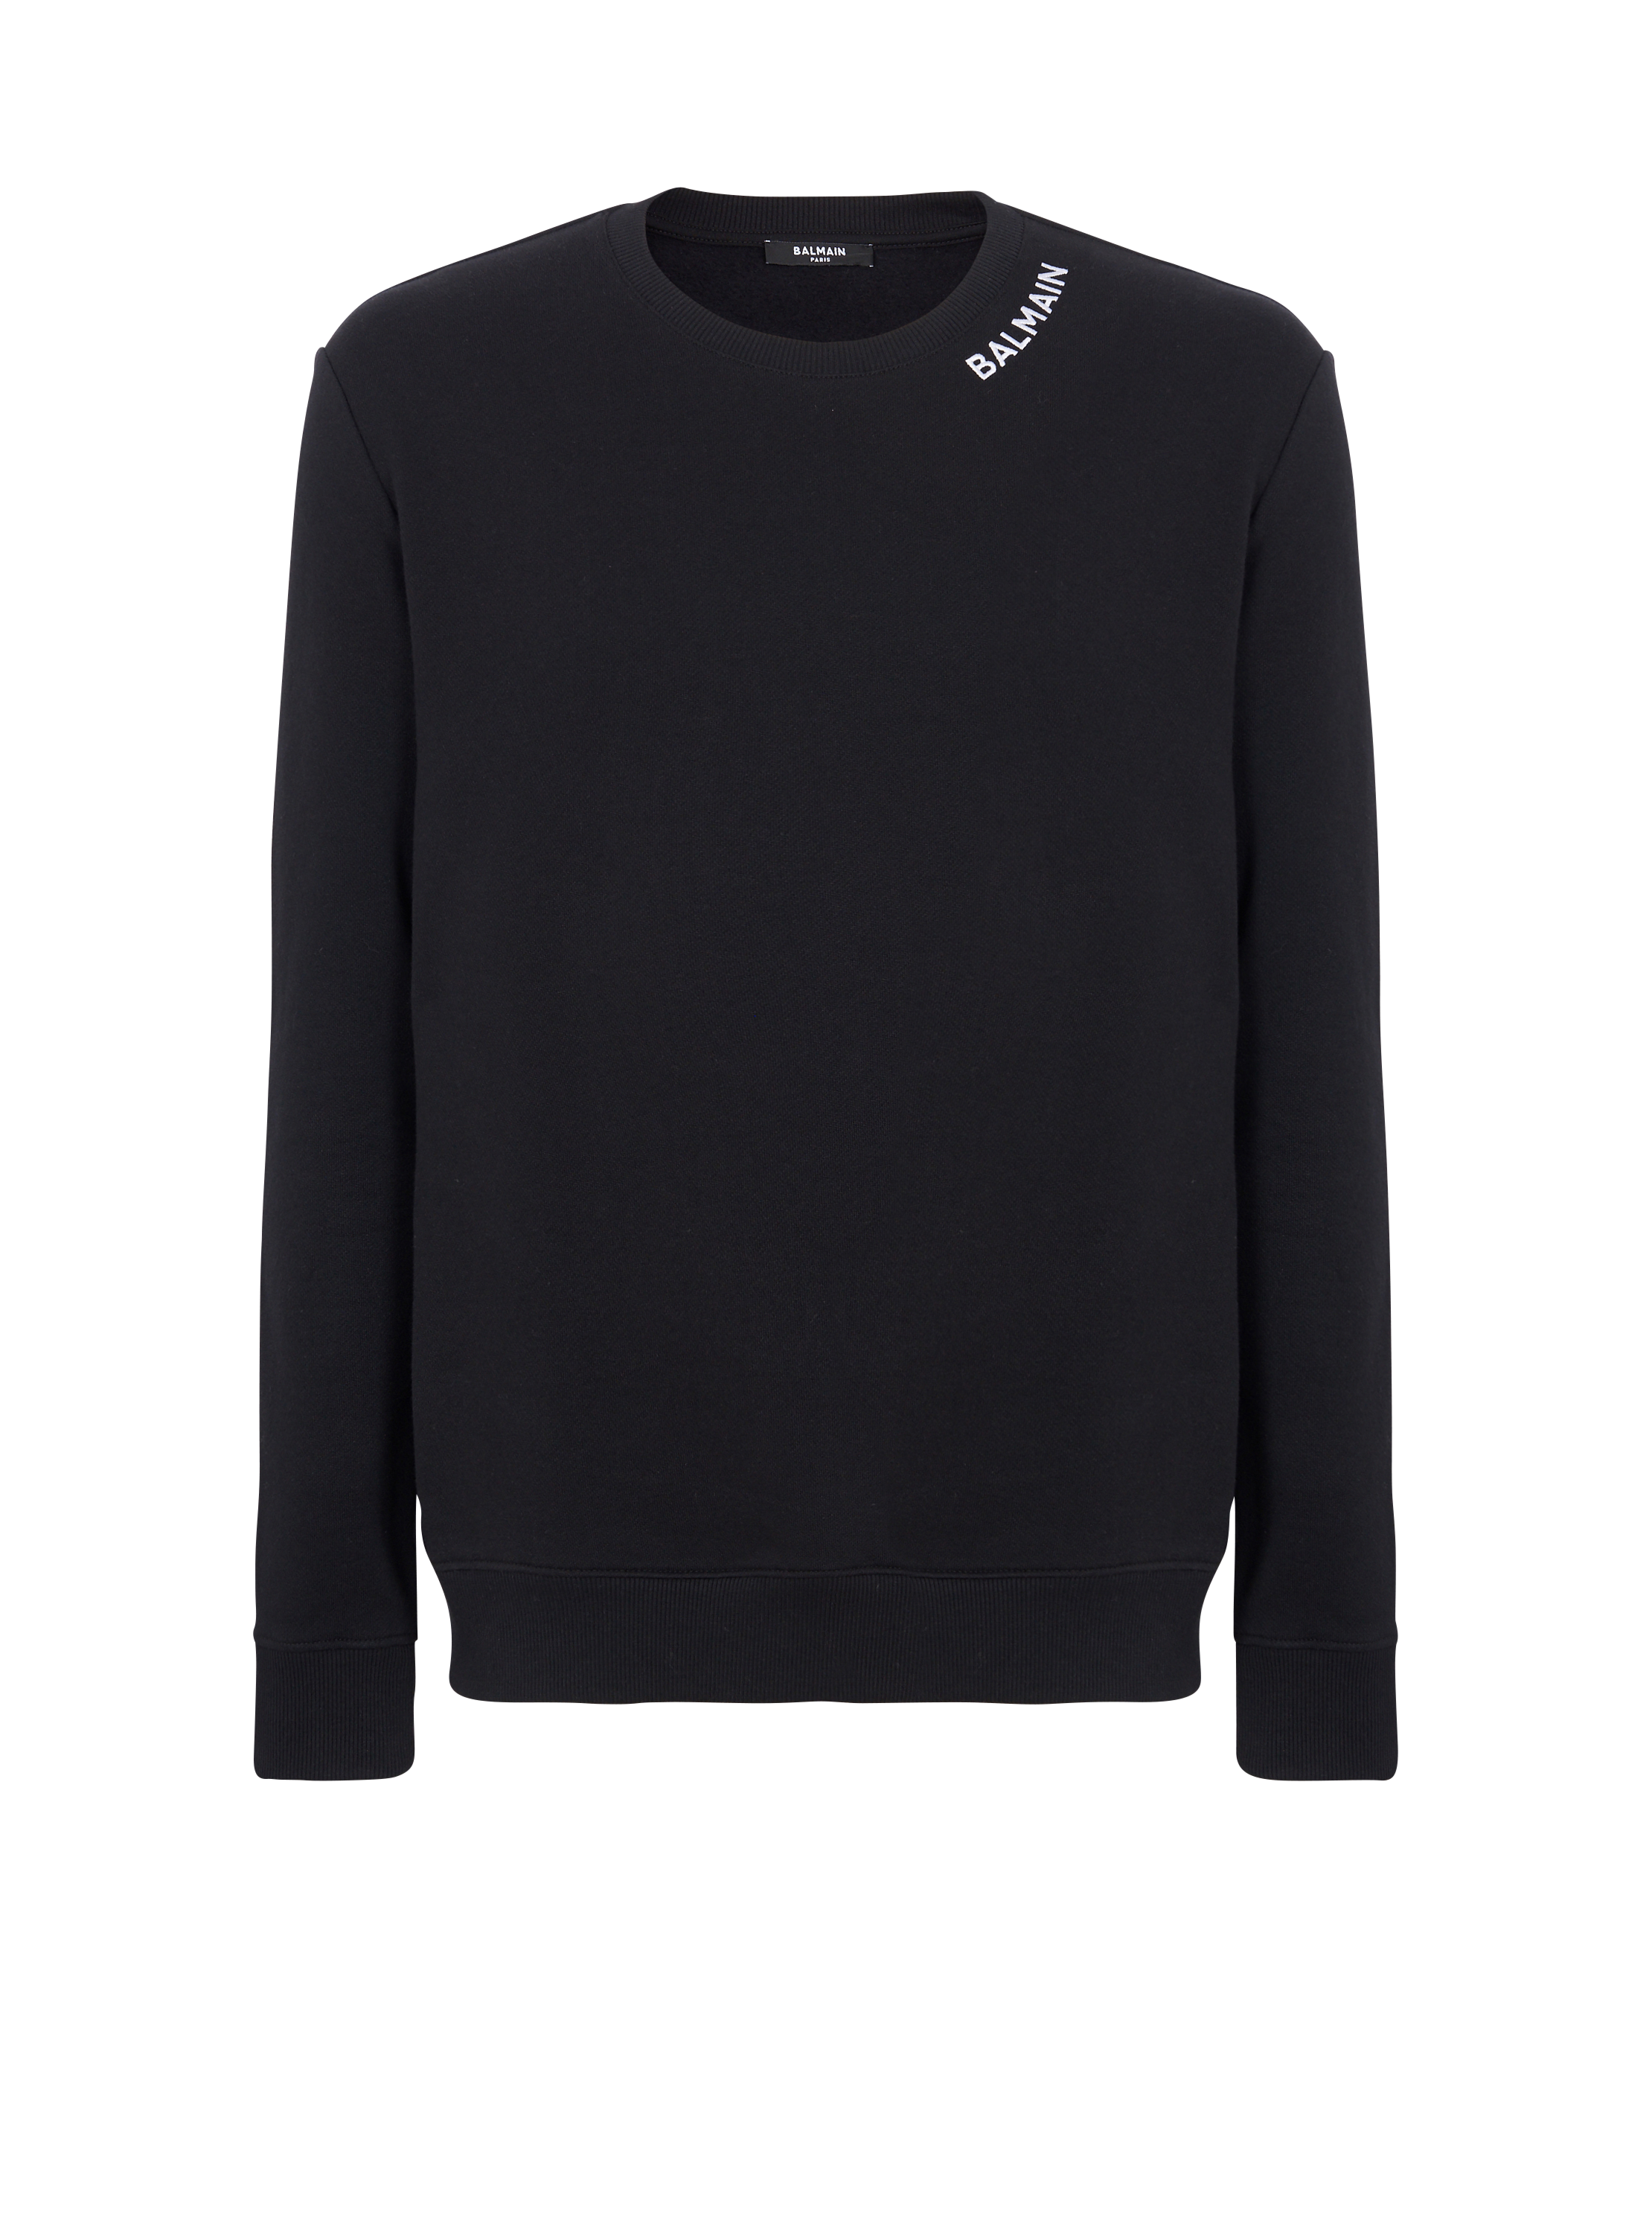 Balmain embroidered sweater, black, hi-res